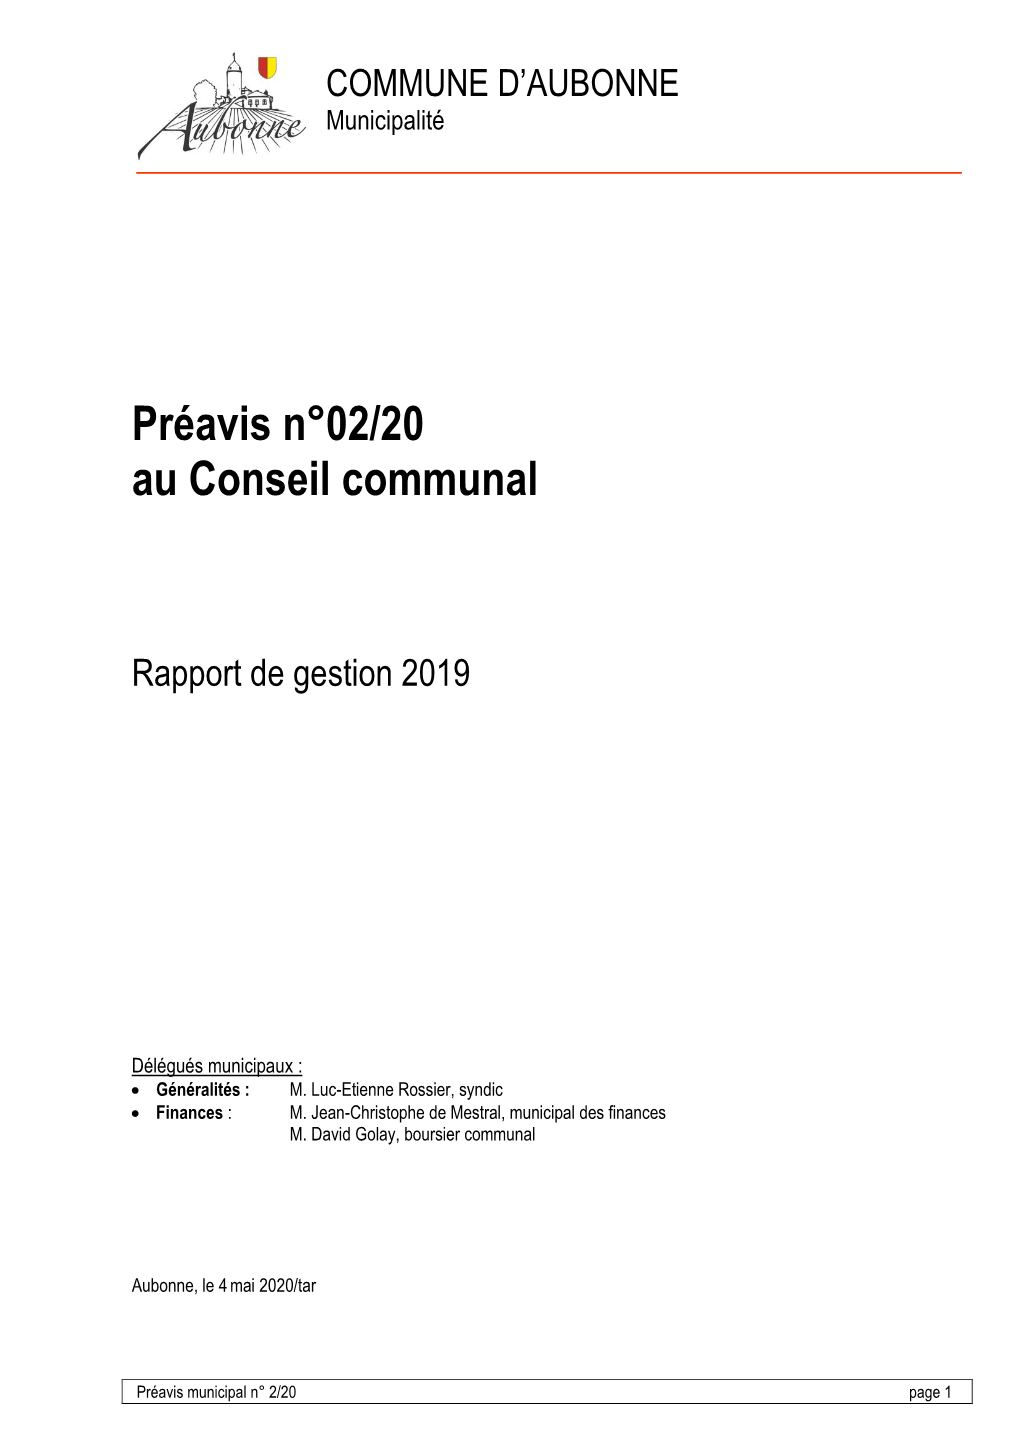 Rapport De Gestion 2019